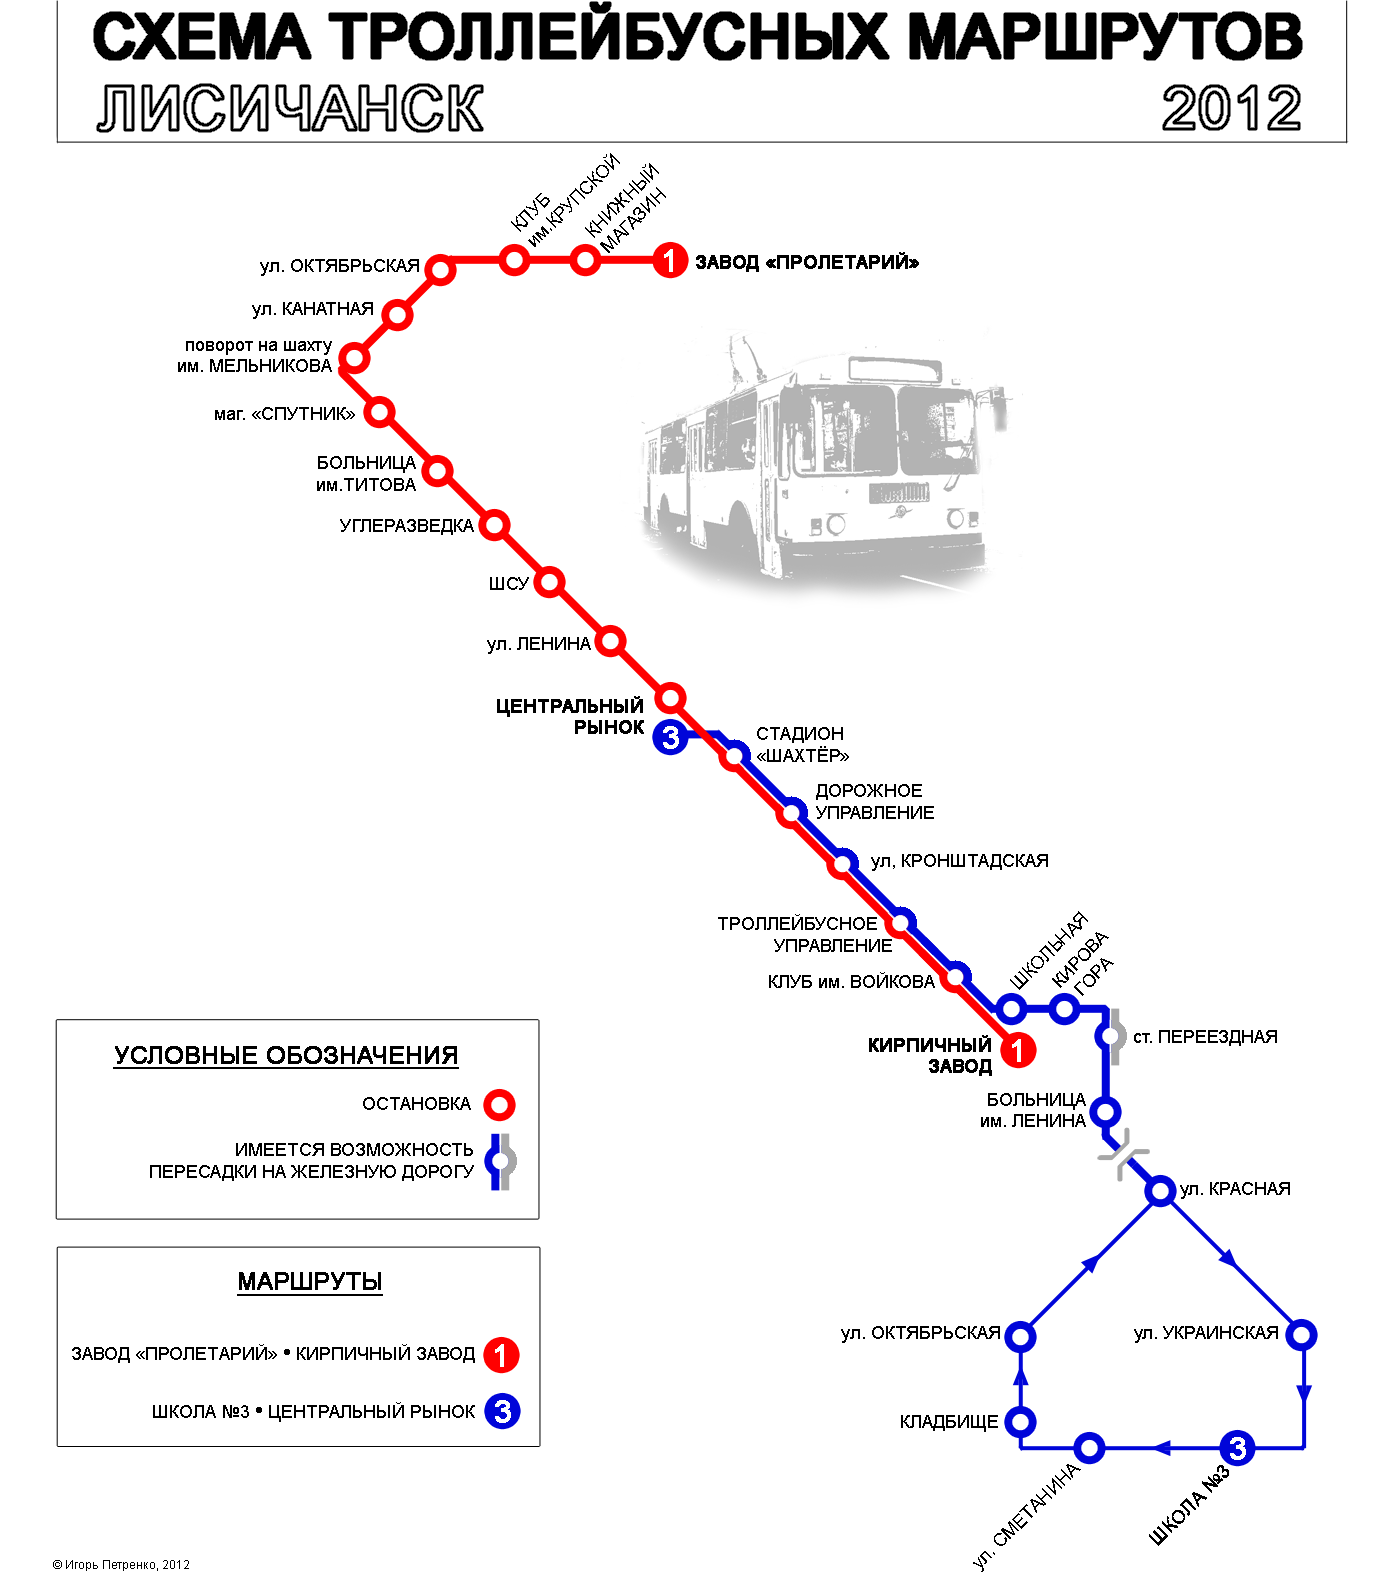 Lysyčanskas — Route maps